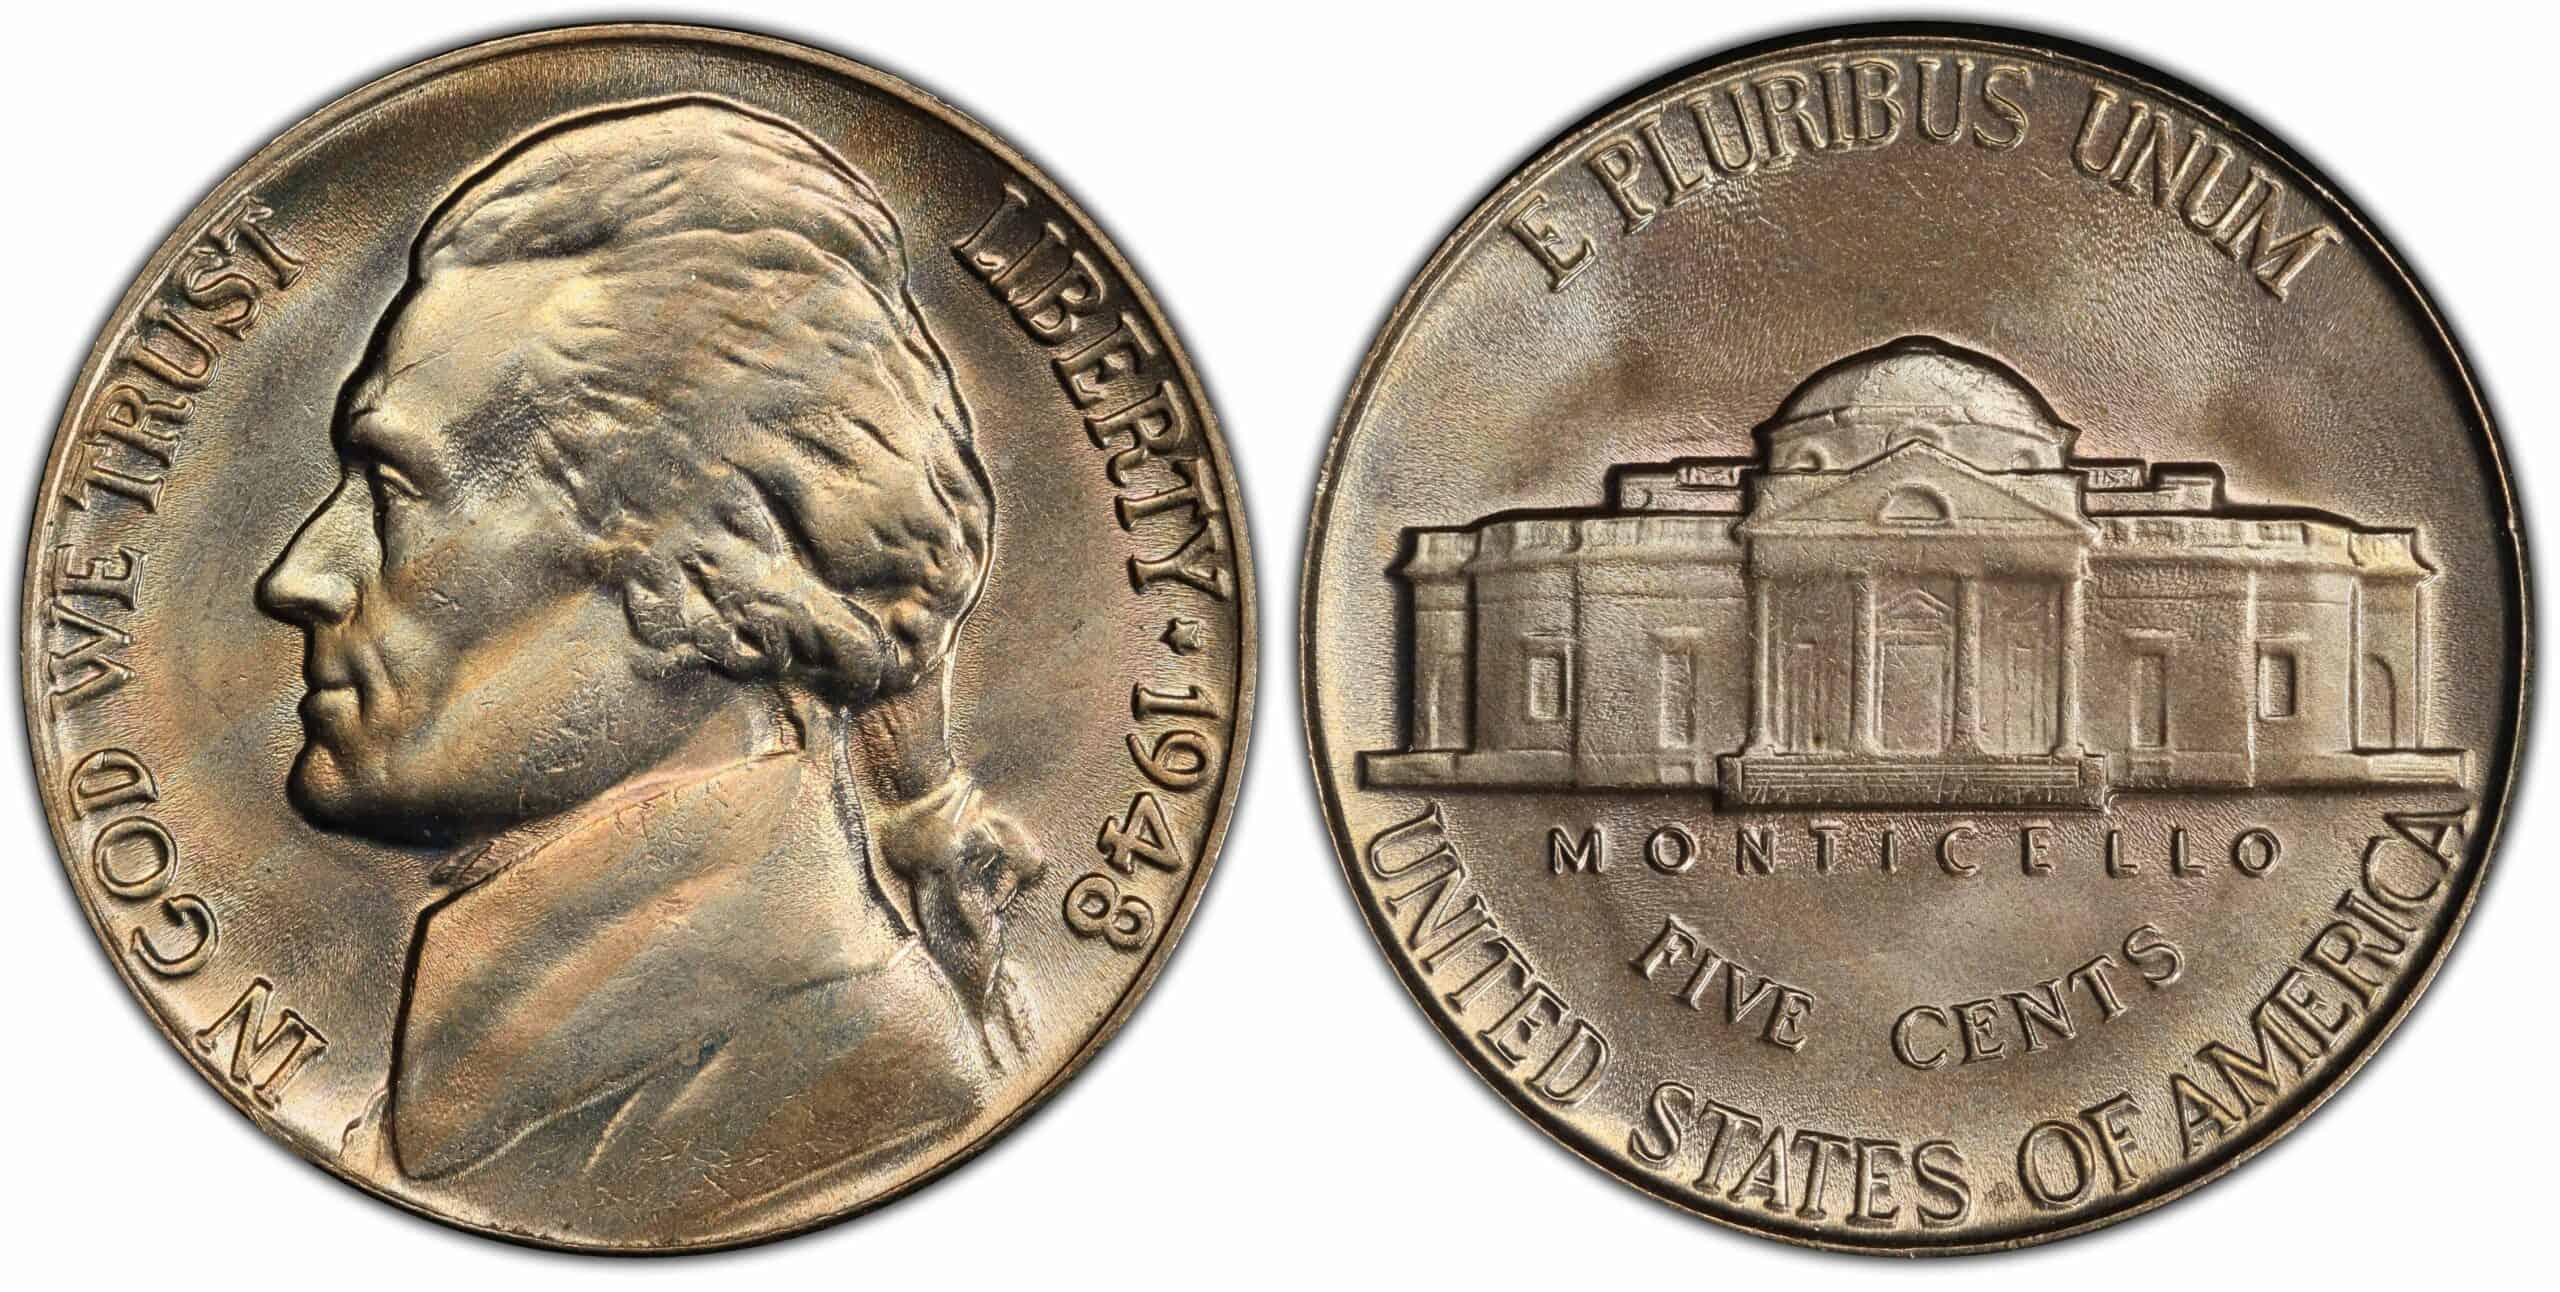 The 1948 Nickel 